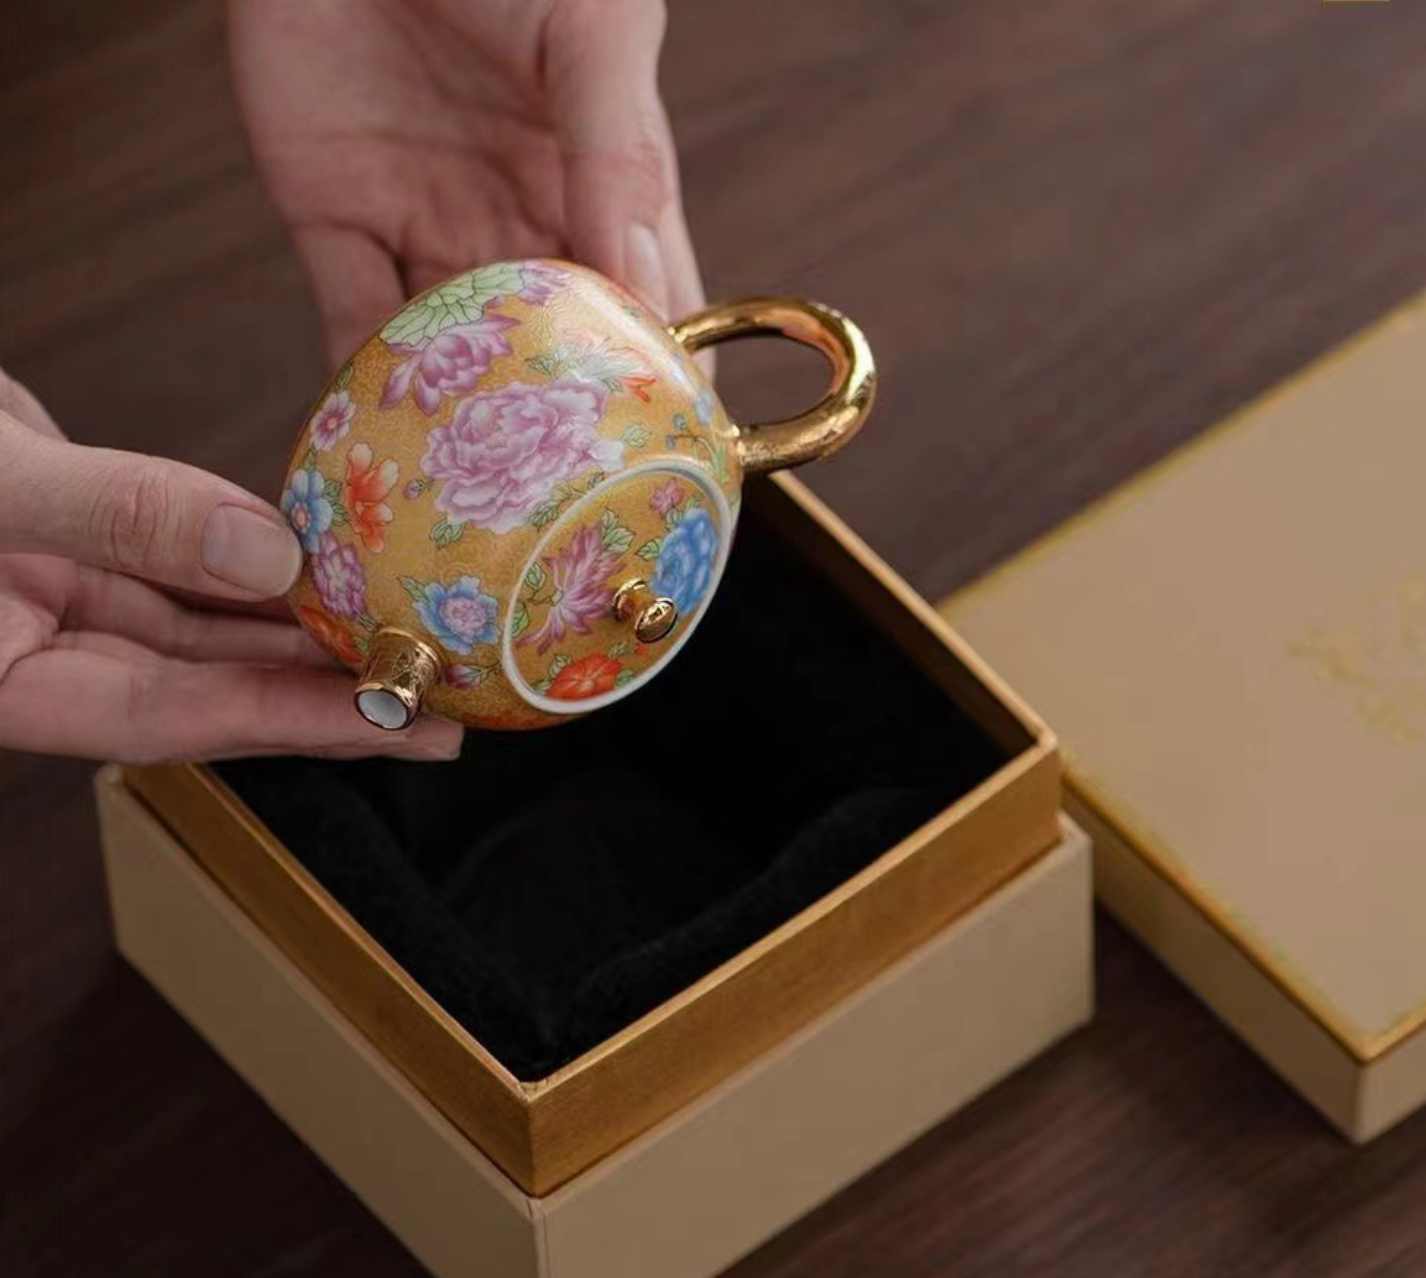 Tai Chi sheep fat jade porcelain enamel mark cloisonne colored gold tea set for home use kung fu tea set tea pot tea cup set.